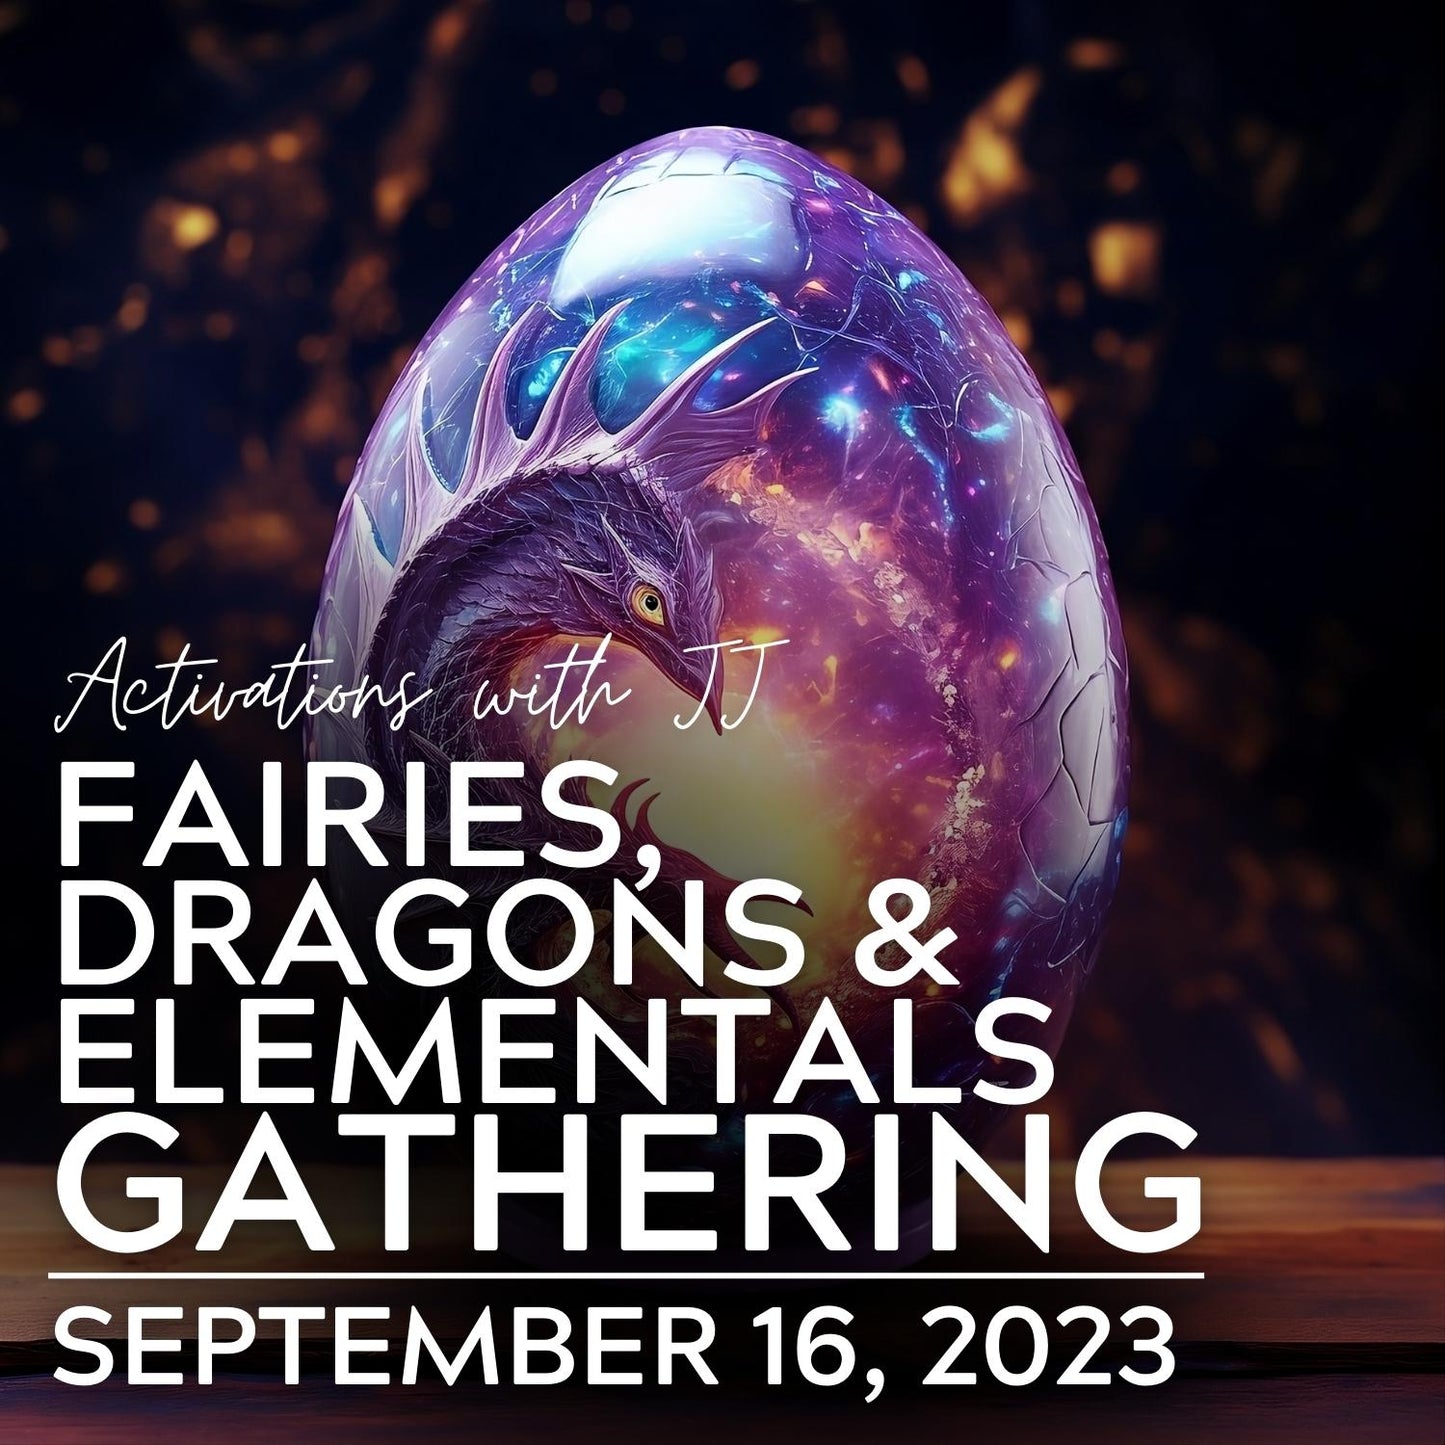 Fairies, Dragons & Elementals Gathering (MP3 Recording) | September 16, 2023